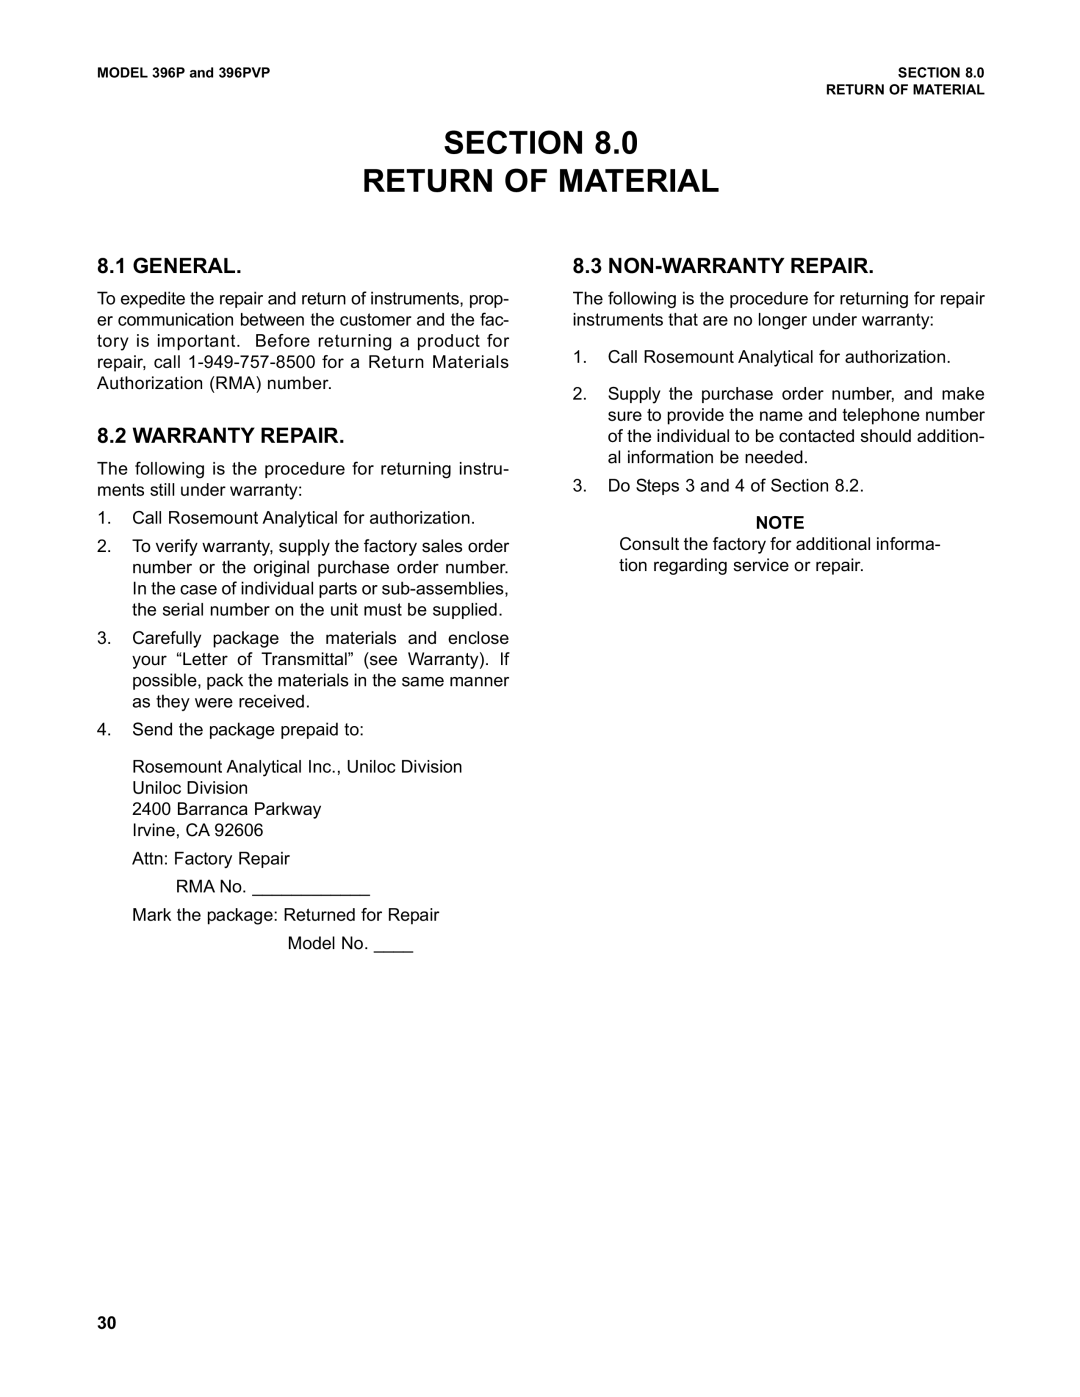 Emerson Process Management 396PVP Section Return Of Material, General, Warranty Repair, Non-Warrantyrepair 